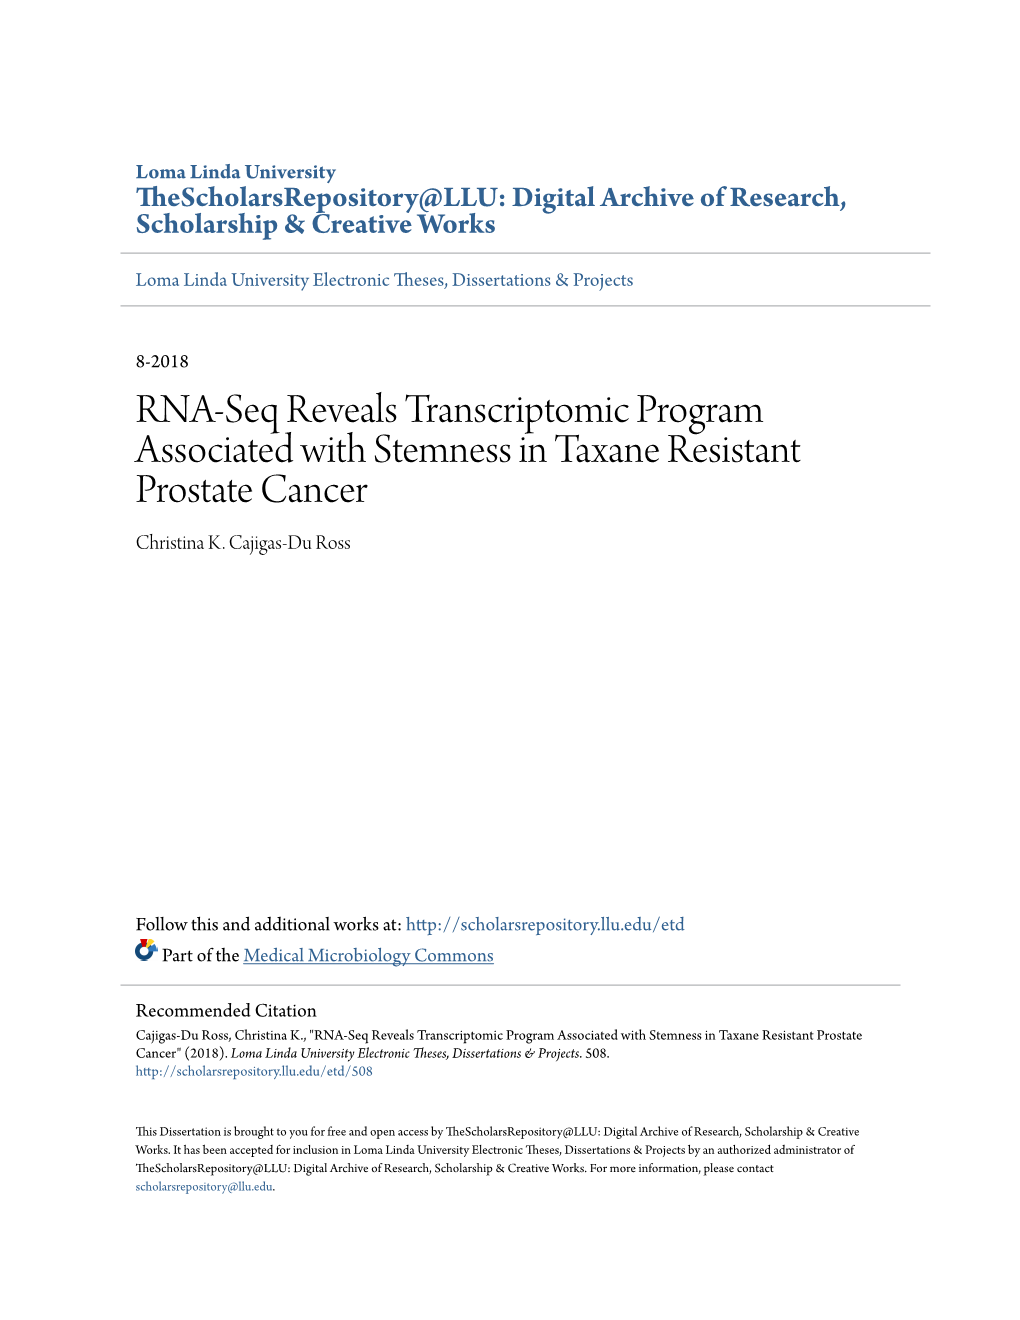 RNA-Seq Reveals Transcriptomic Program Associated with Stemness in Taxane Resistant Prostate Cancer Christina K